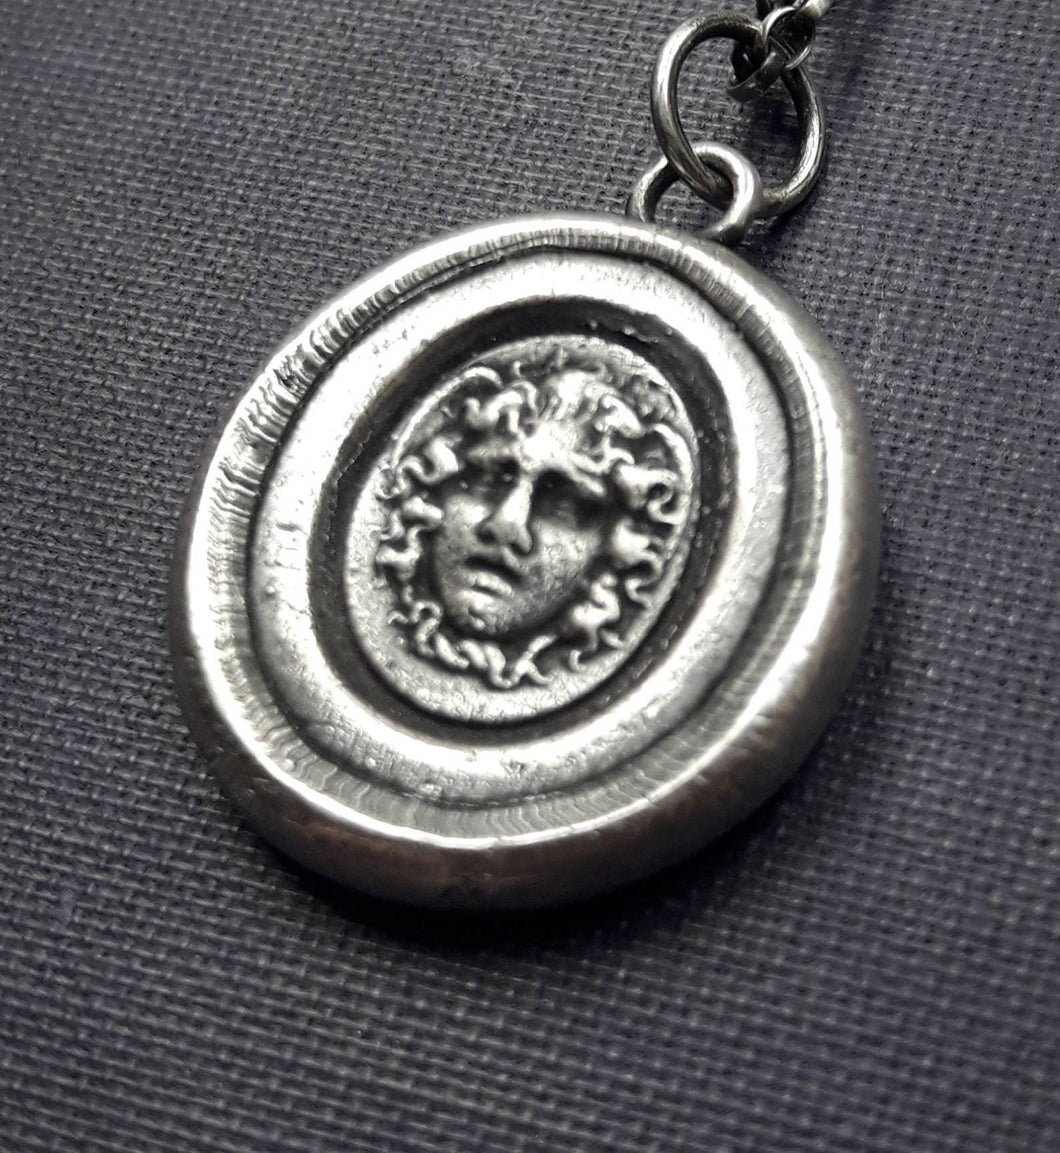 Medusa pendant,  Antique wax letter seal, Tassie intaglio featuring the Greek Gorgon.  Strong Warrior Woman